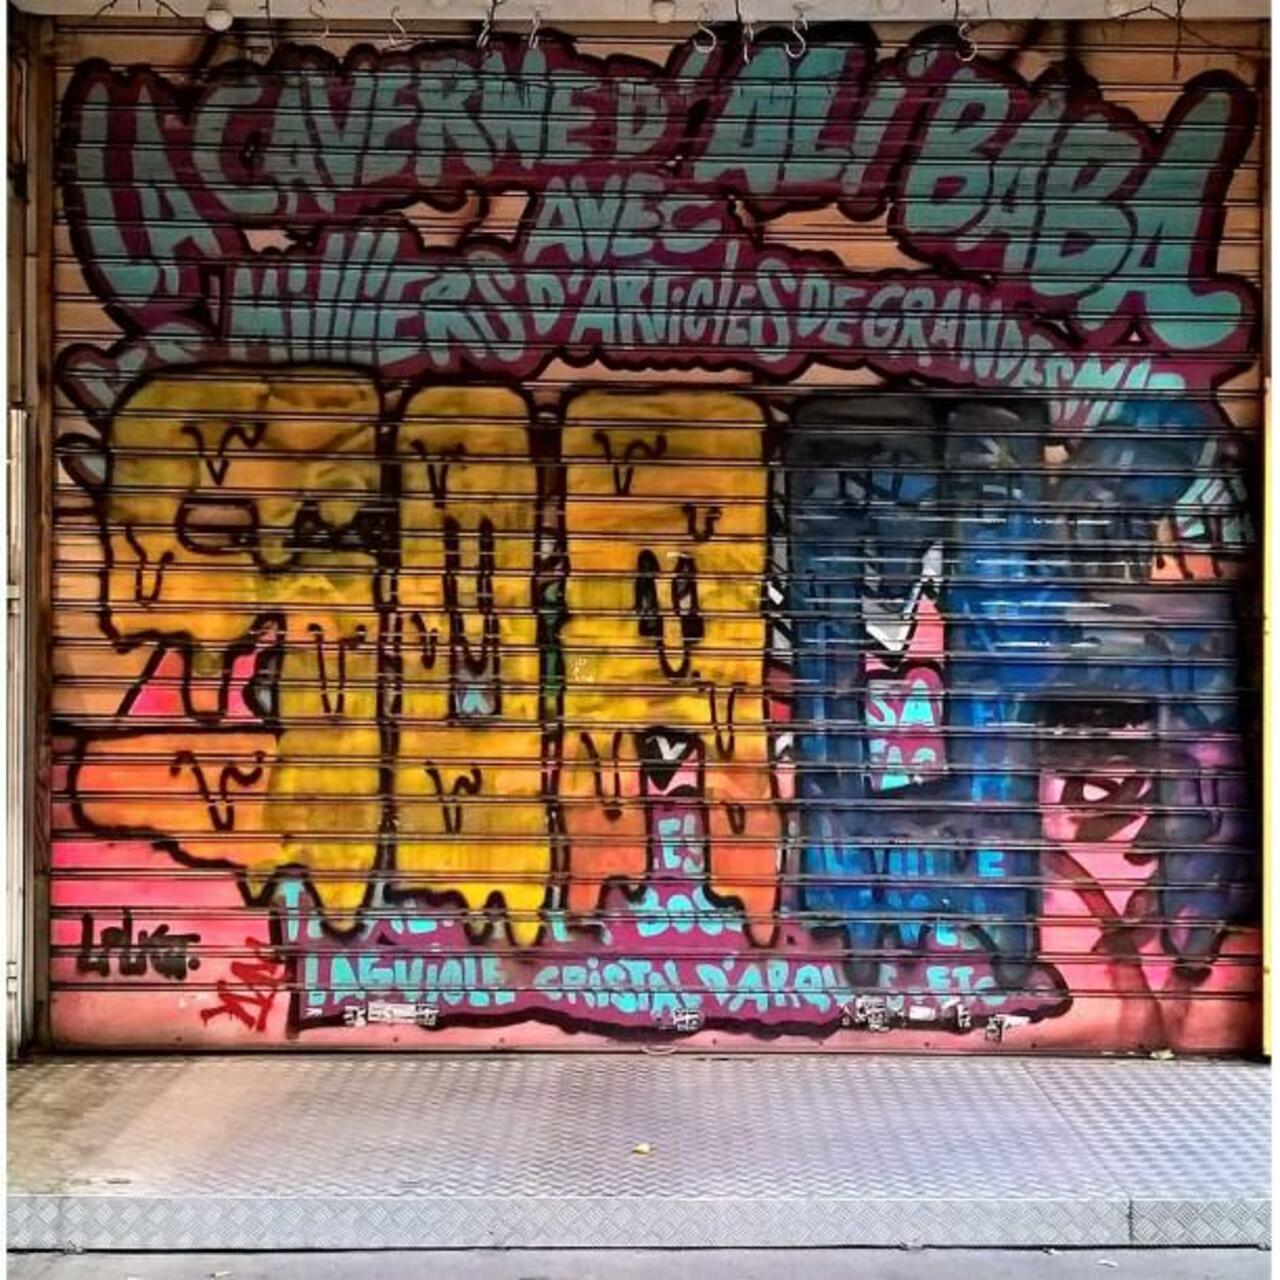 circumjacent_fr: #Paris #graffiti photo by maxdimontemarciano http://ift.tt/1jyBJPo #StreetArt http://t.co/ChdVutiWn3